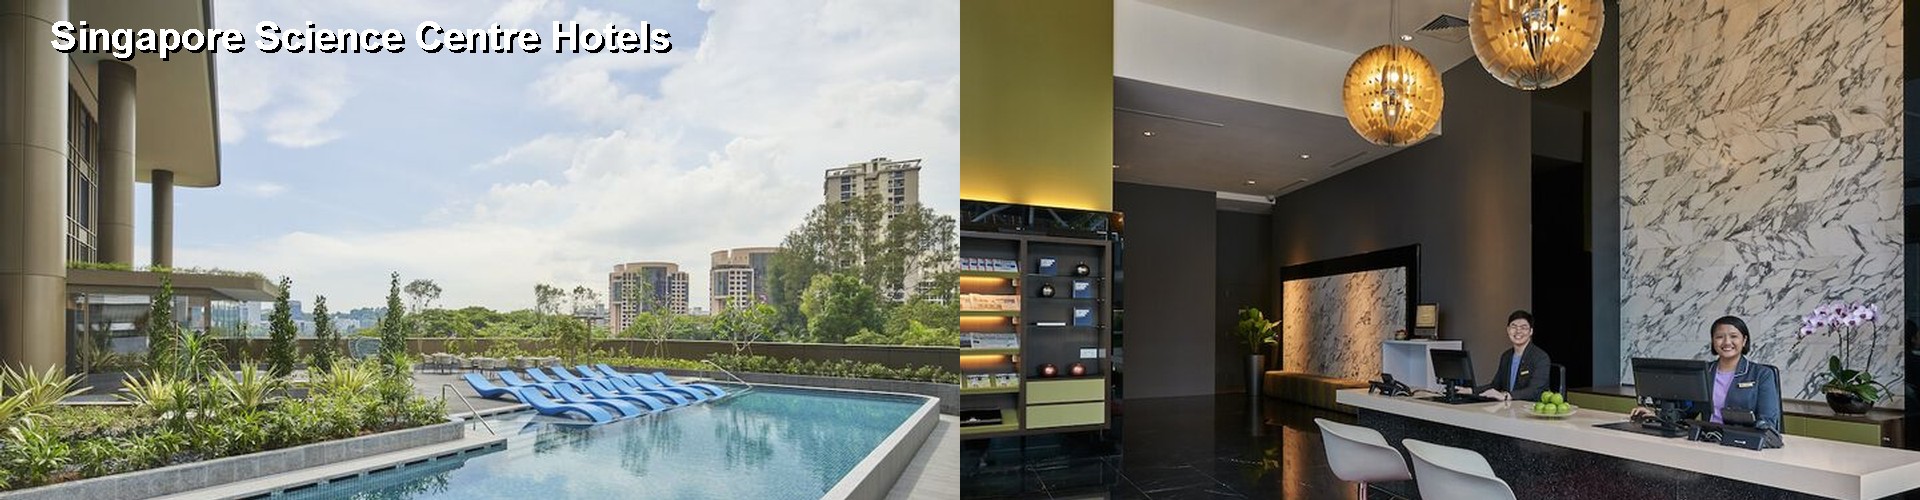 4 Best Hotels near Singapore Science Centre